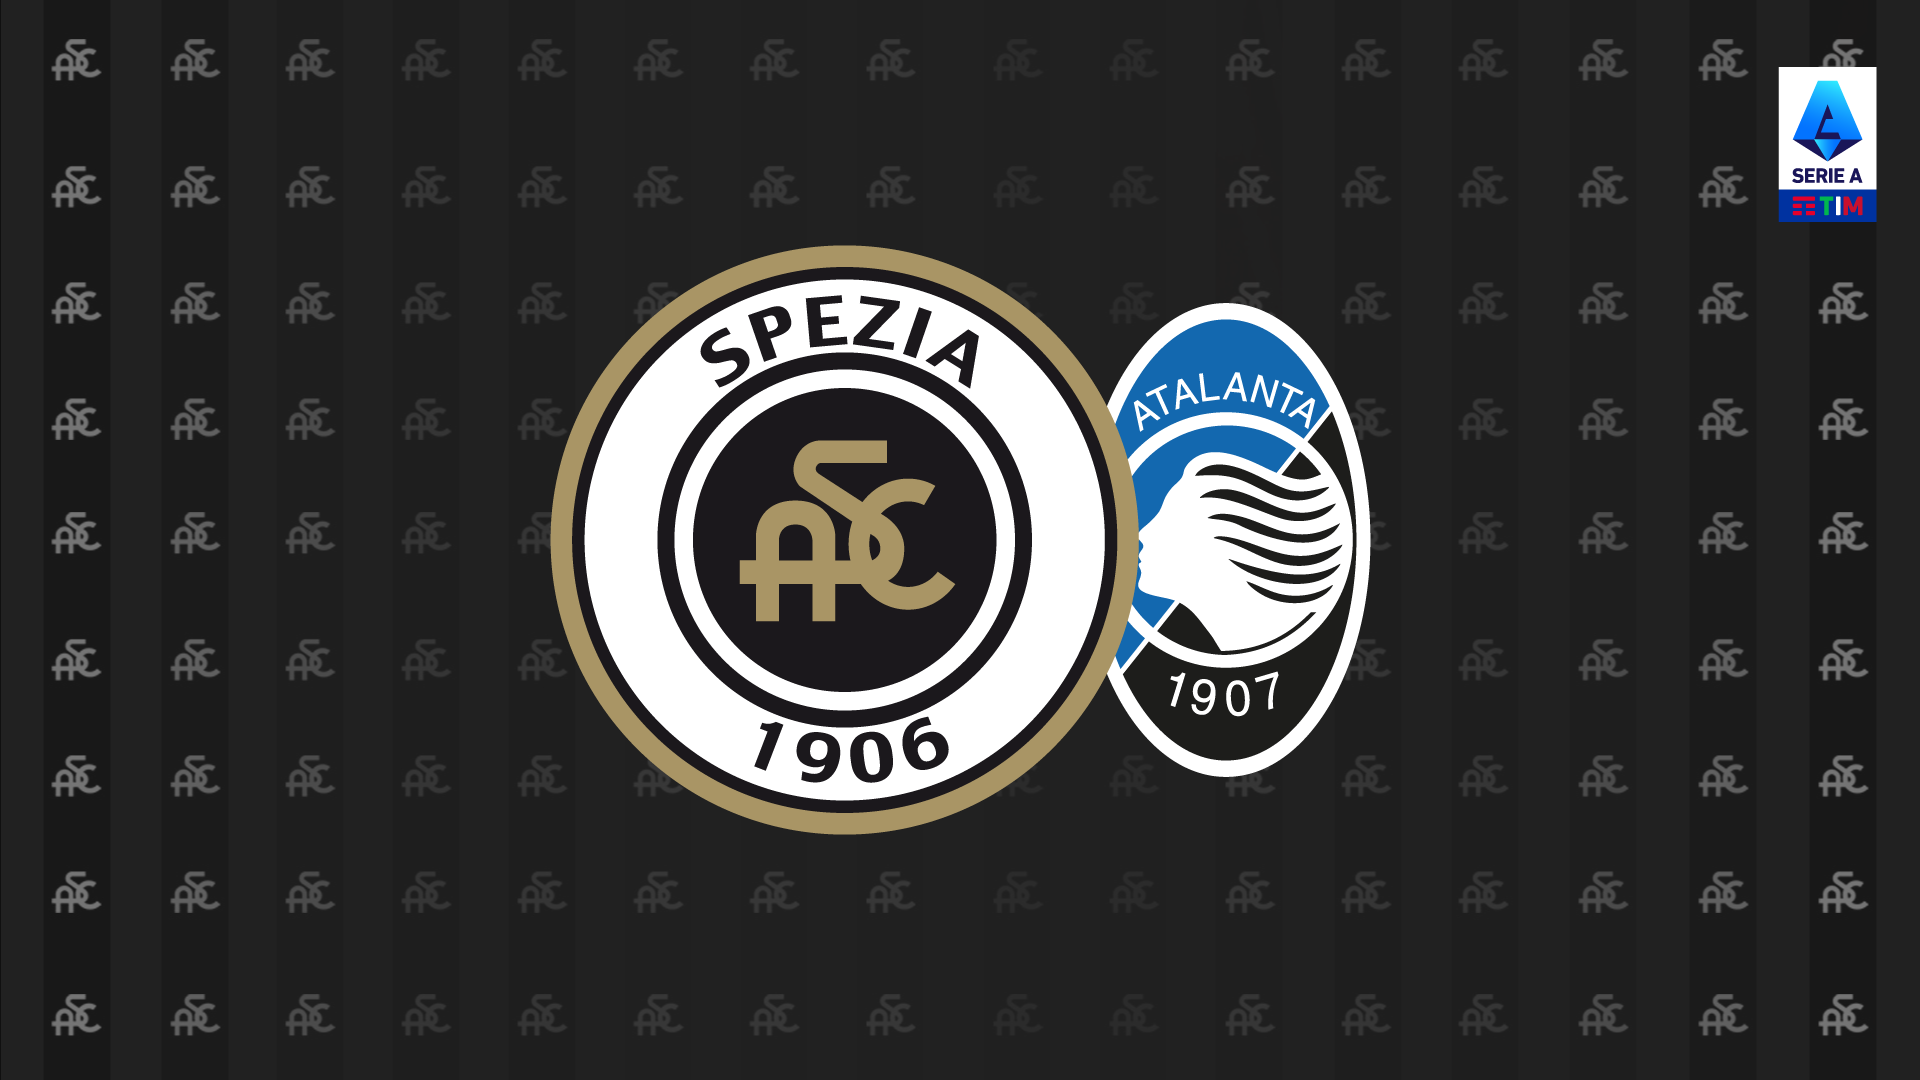 Spezia-Atalanta: free sale available from May 3rd